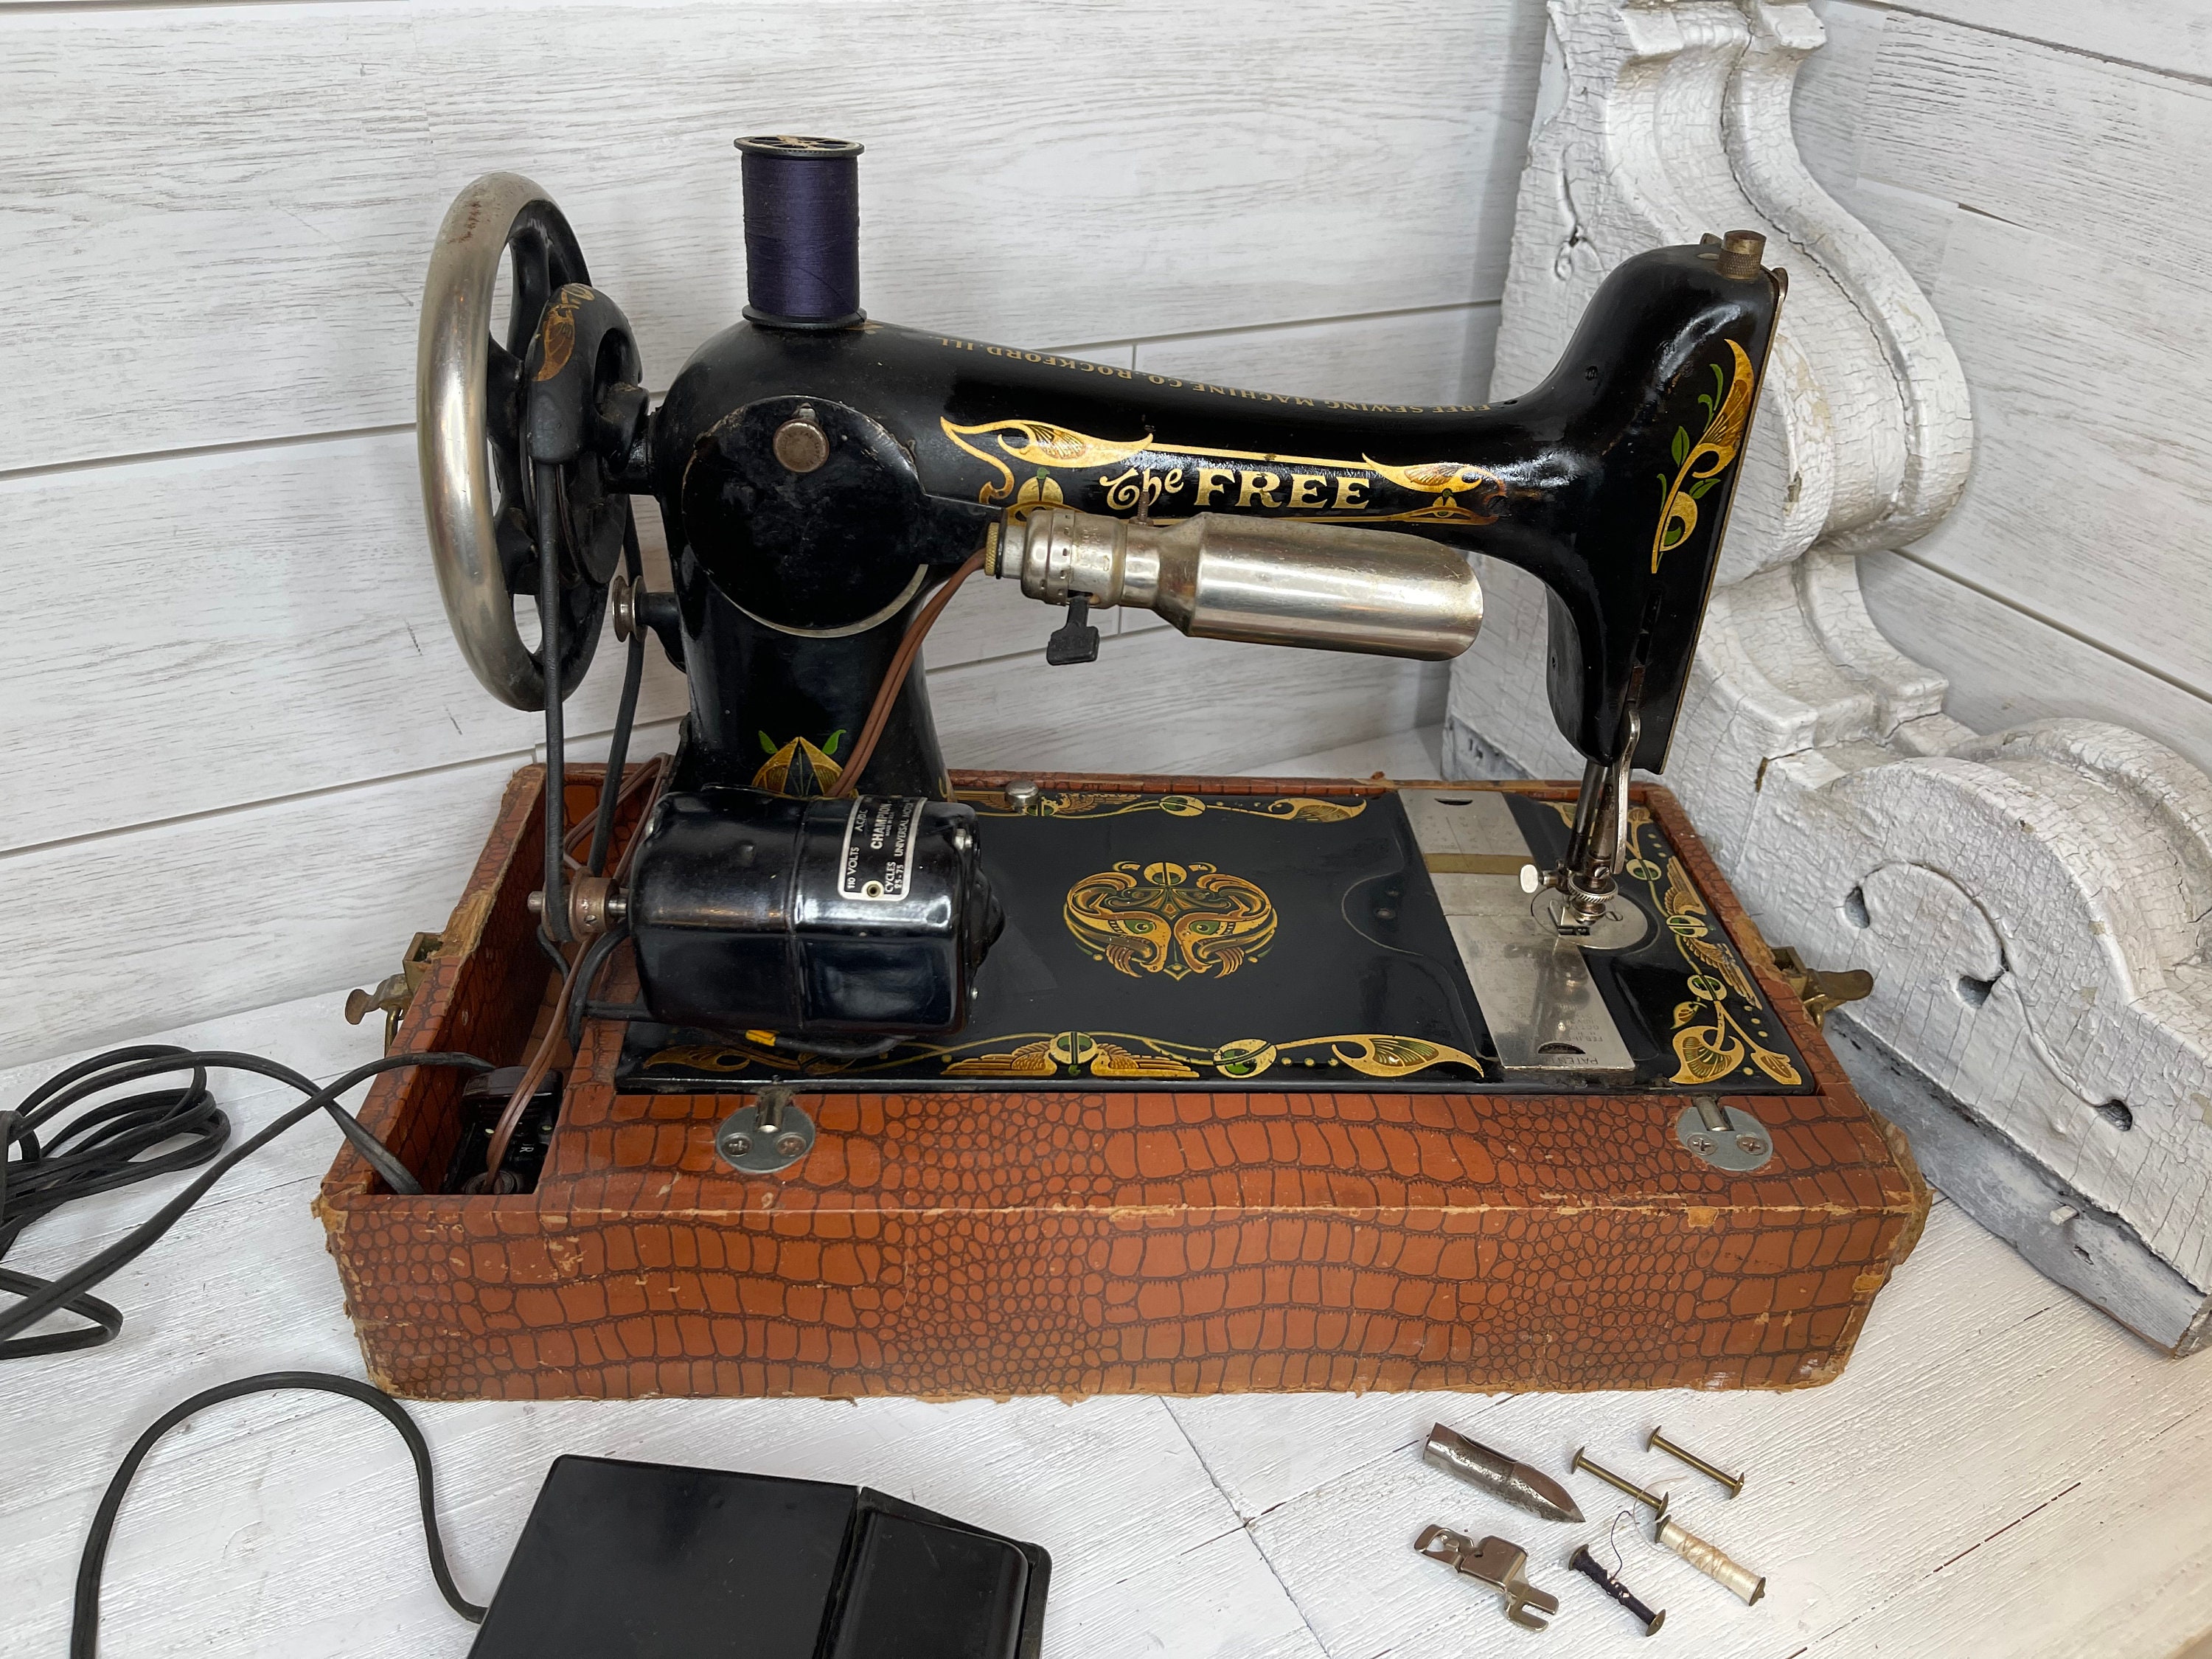 Handy Stitch Bundle Including Handheld Sewing Machine, Spindles